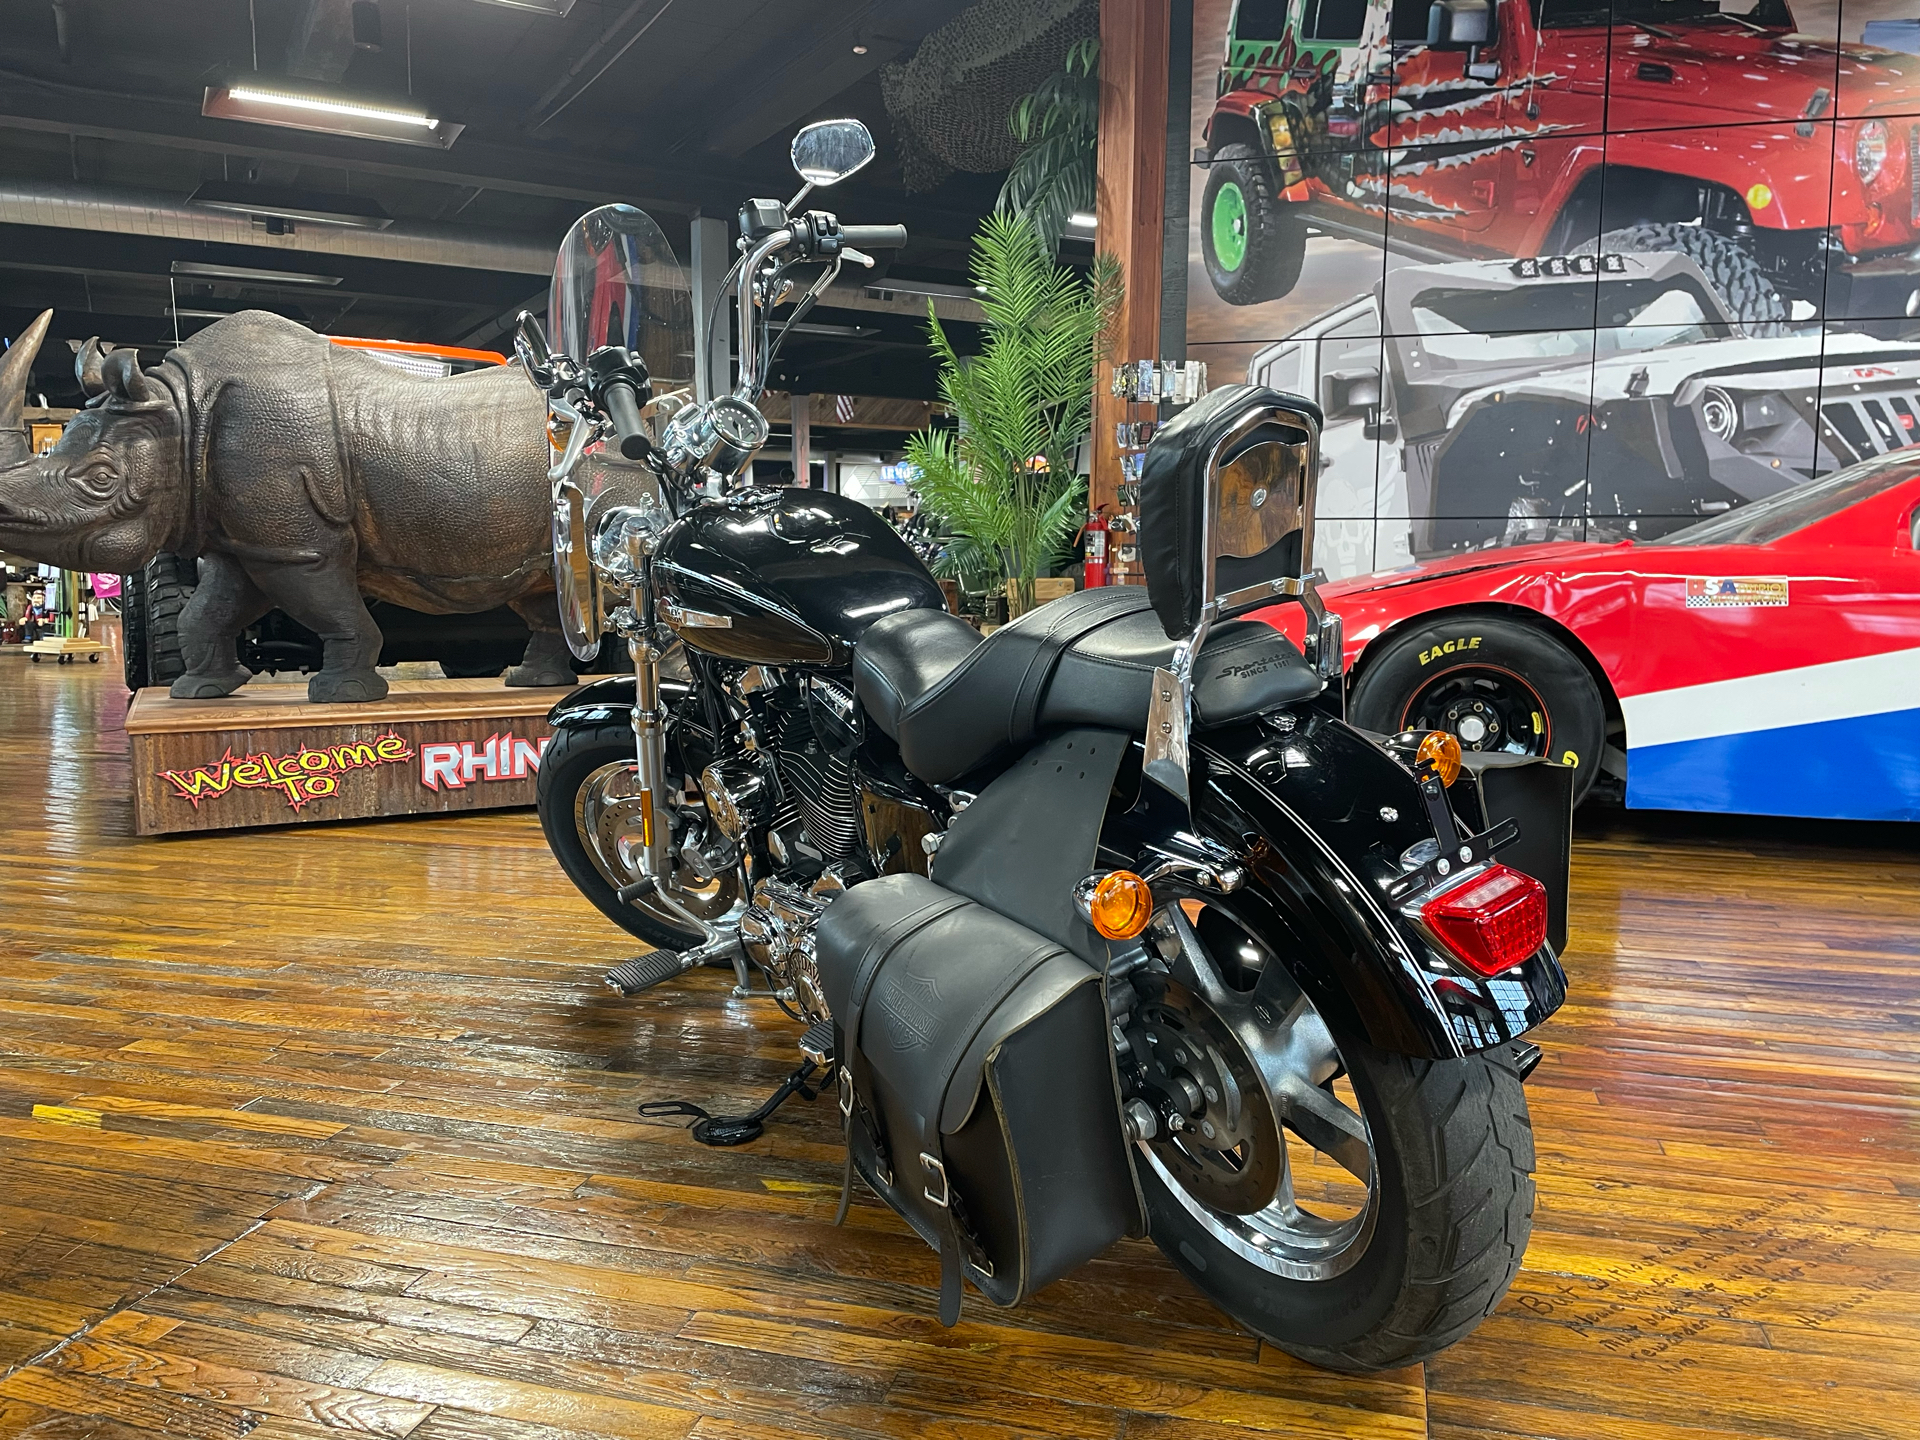 2016 Harley-Davidson 1200 Custom in Laurel, Mississippi - Photo 4